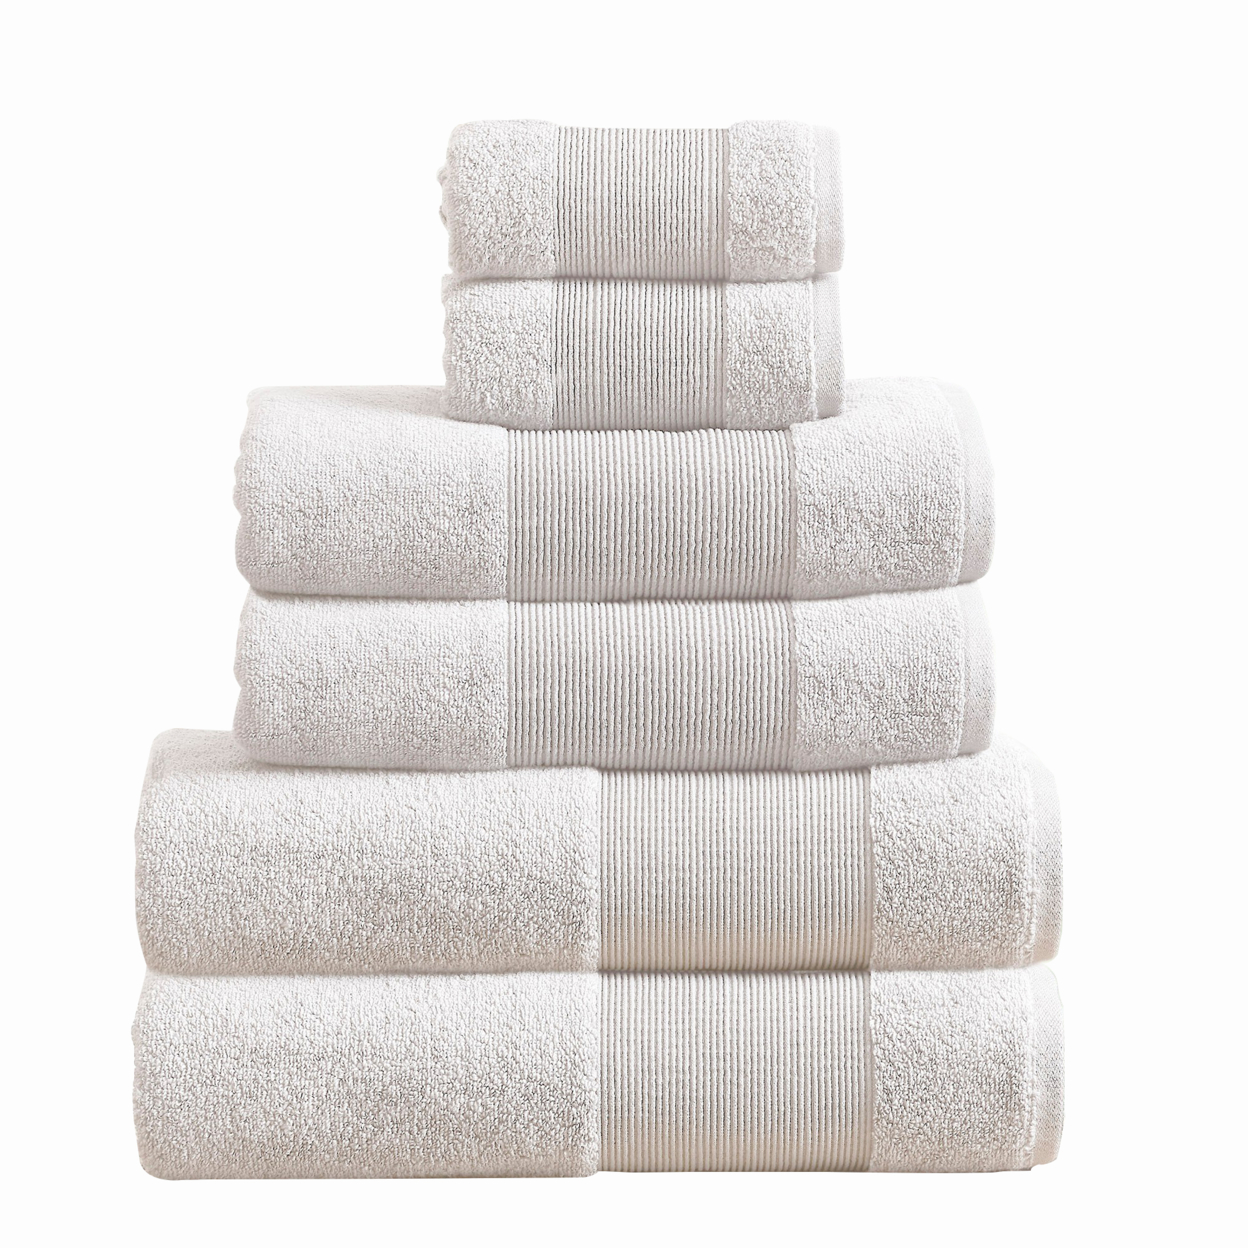 Indy Modern 6 Piece Cotton Towel Set, Softly Textured Design, Crisp White- Saltoro Sherpi